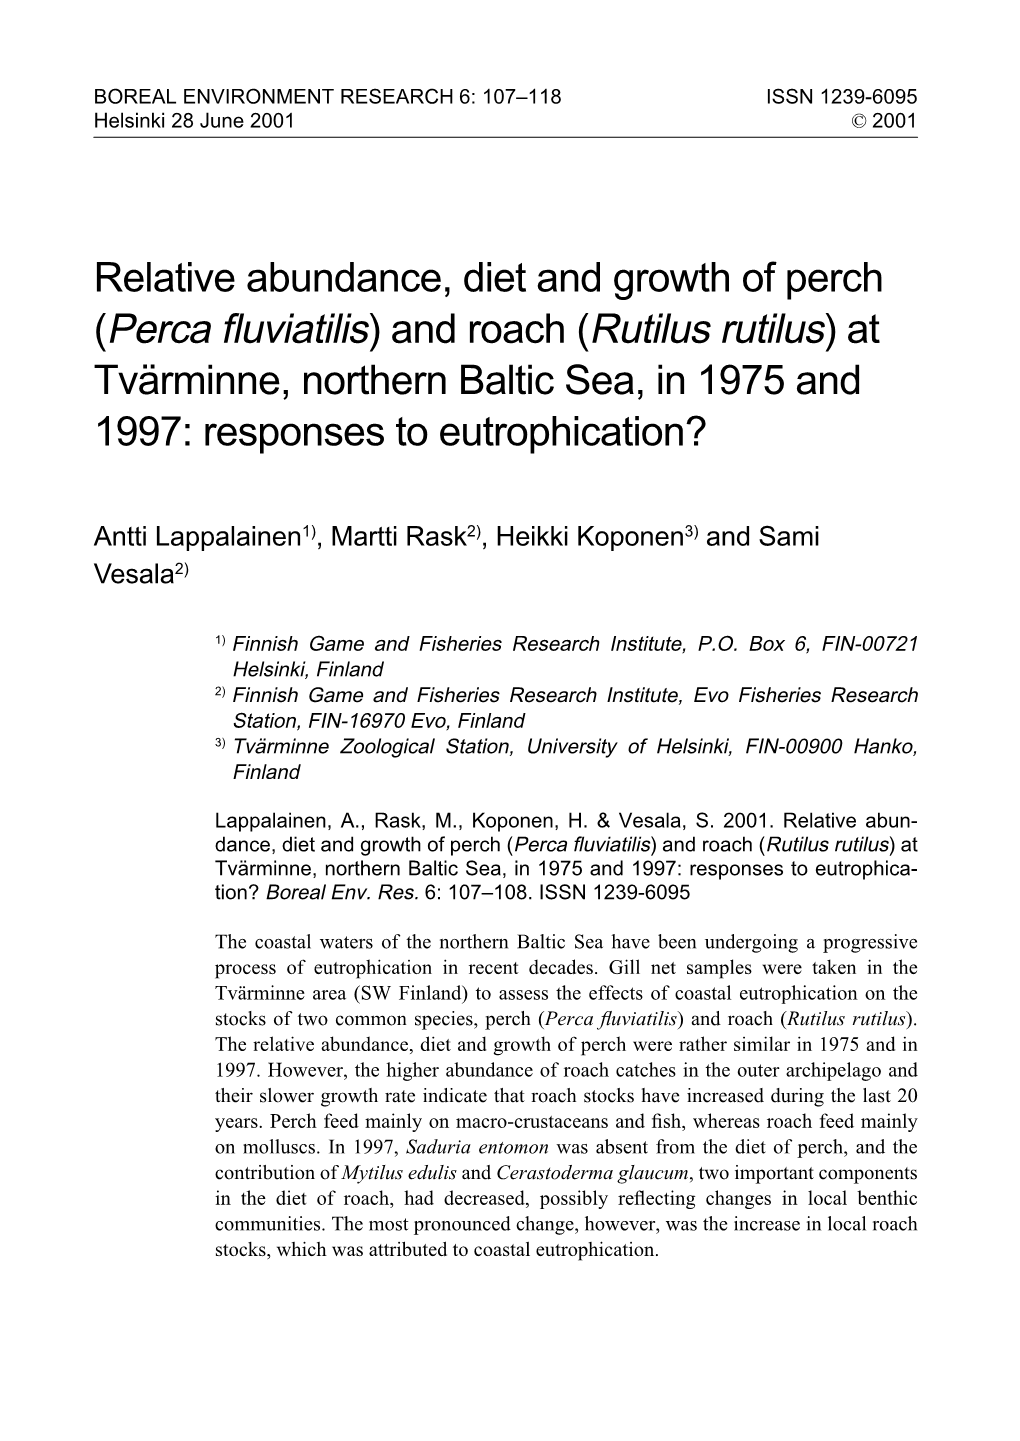 Relative Abundance, Diet and Growth of Perch (Perca Fluviatilis)